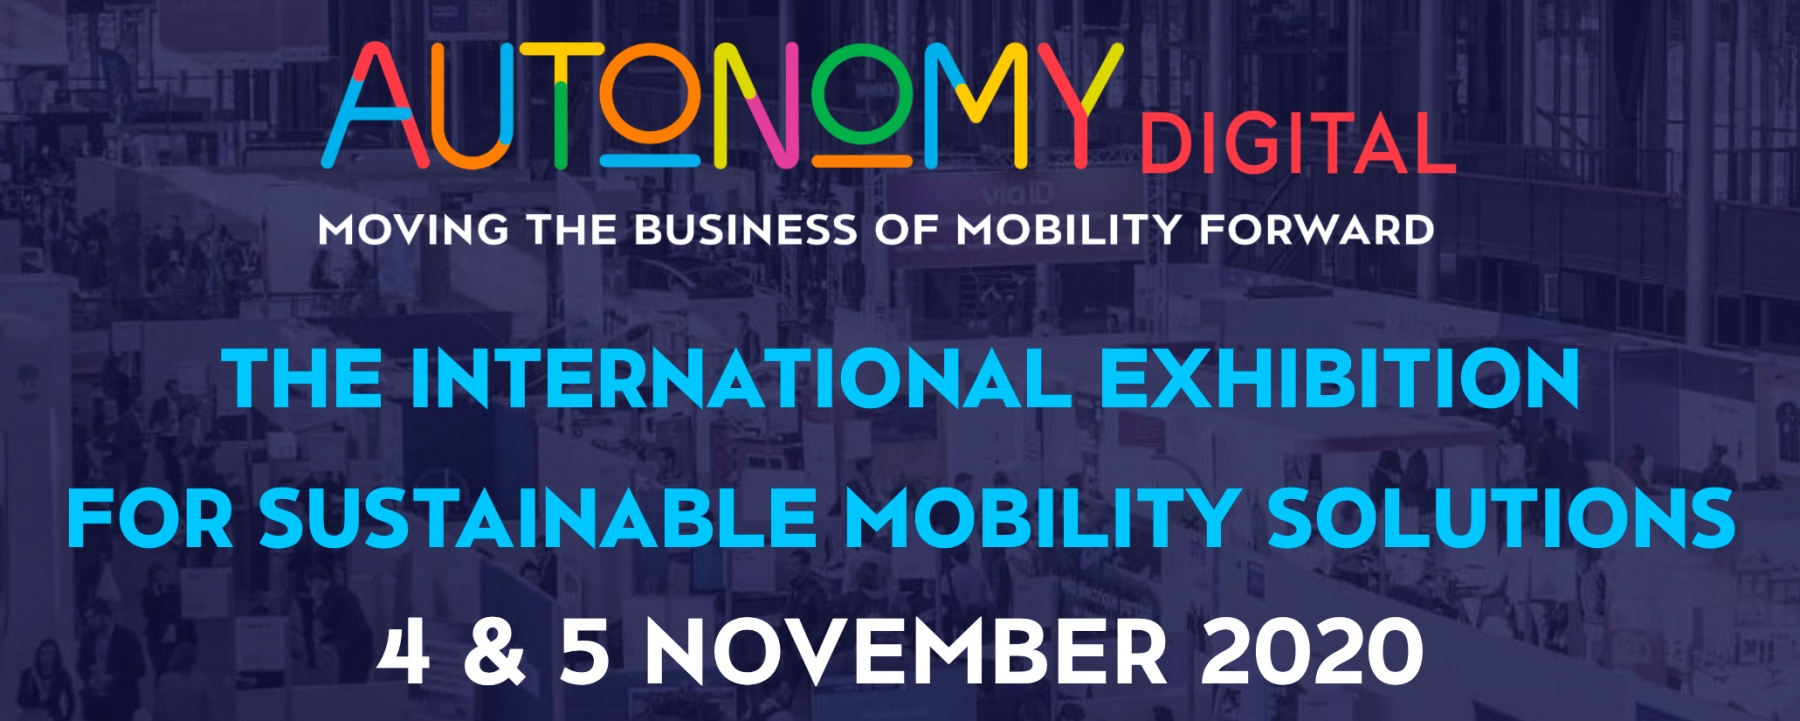 Autonomy Digital, salon organisé par Maddyness, les 4 & 5 novembre 2020